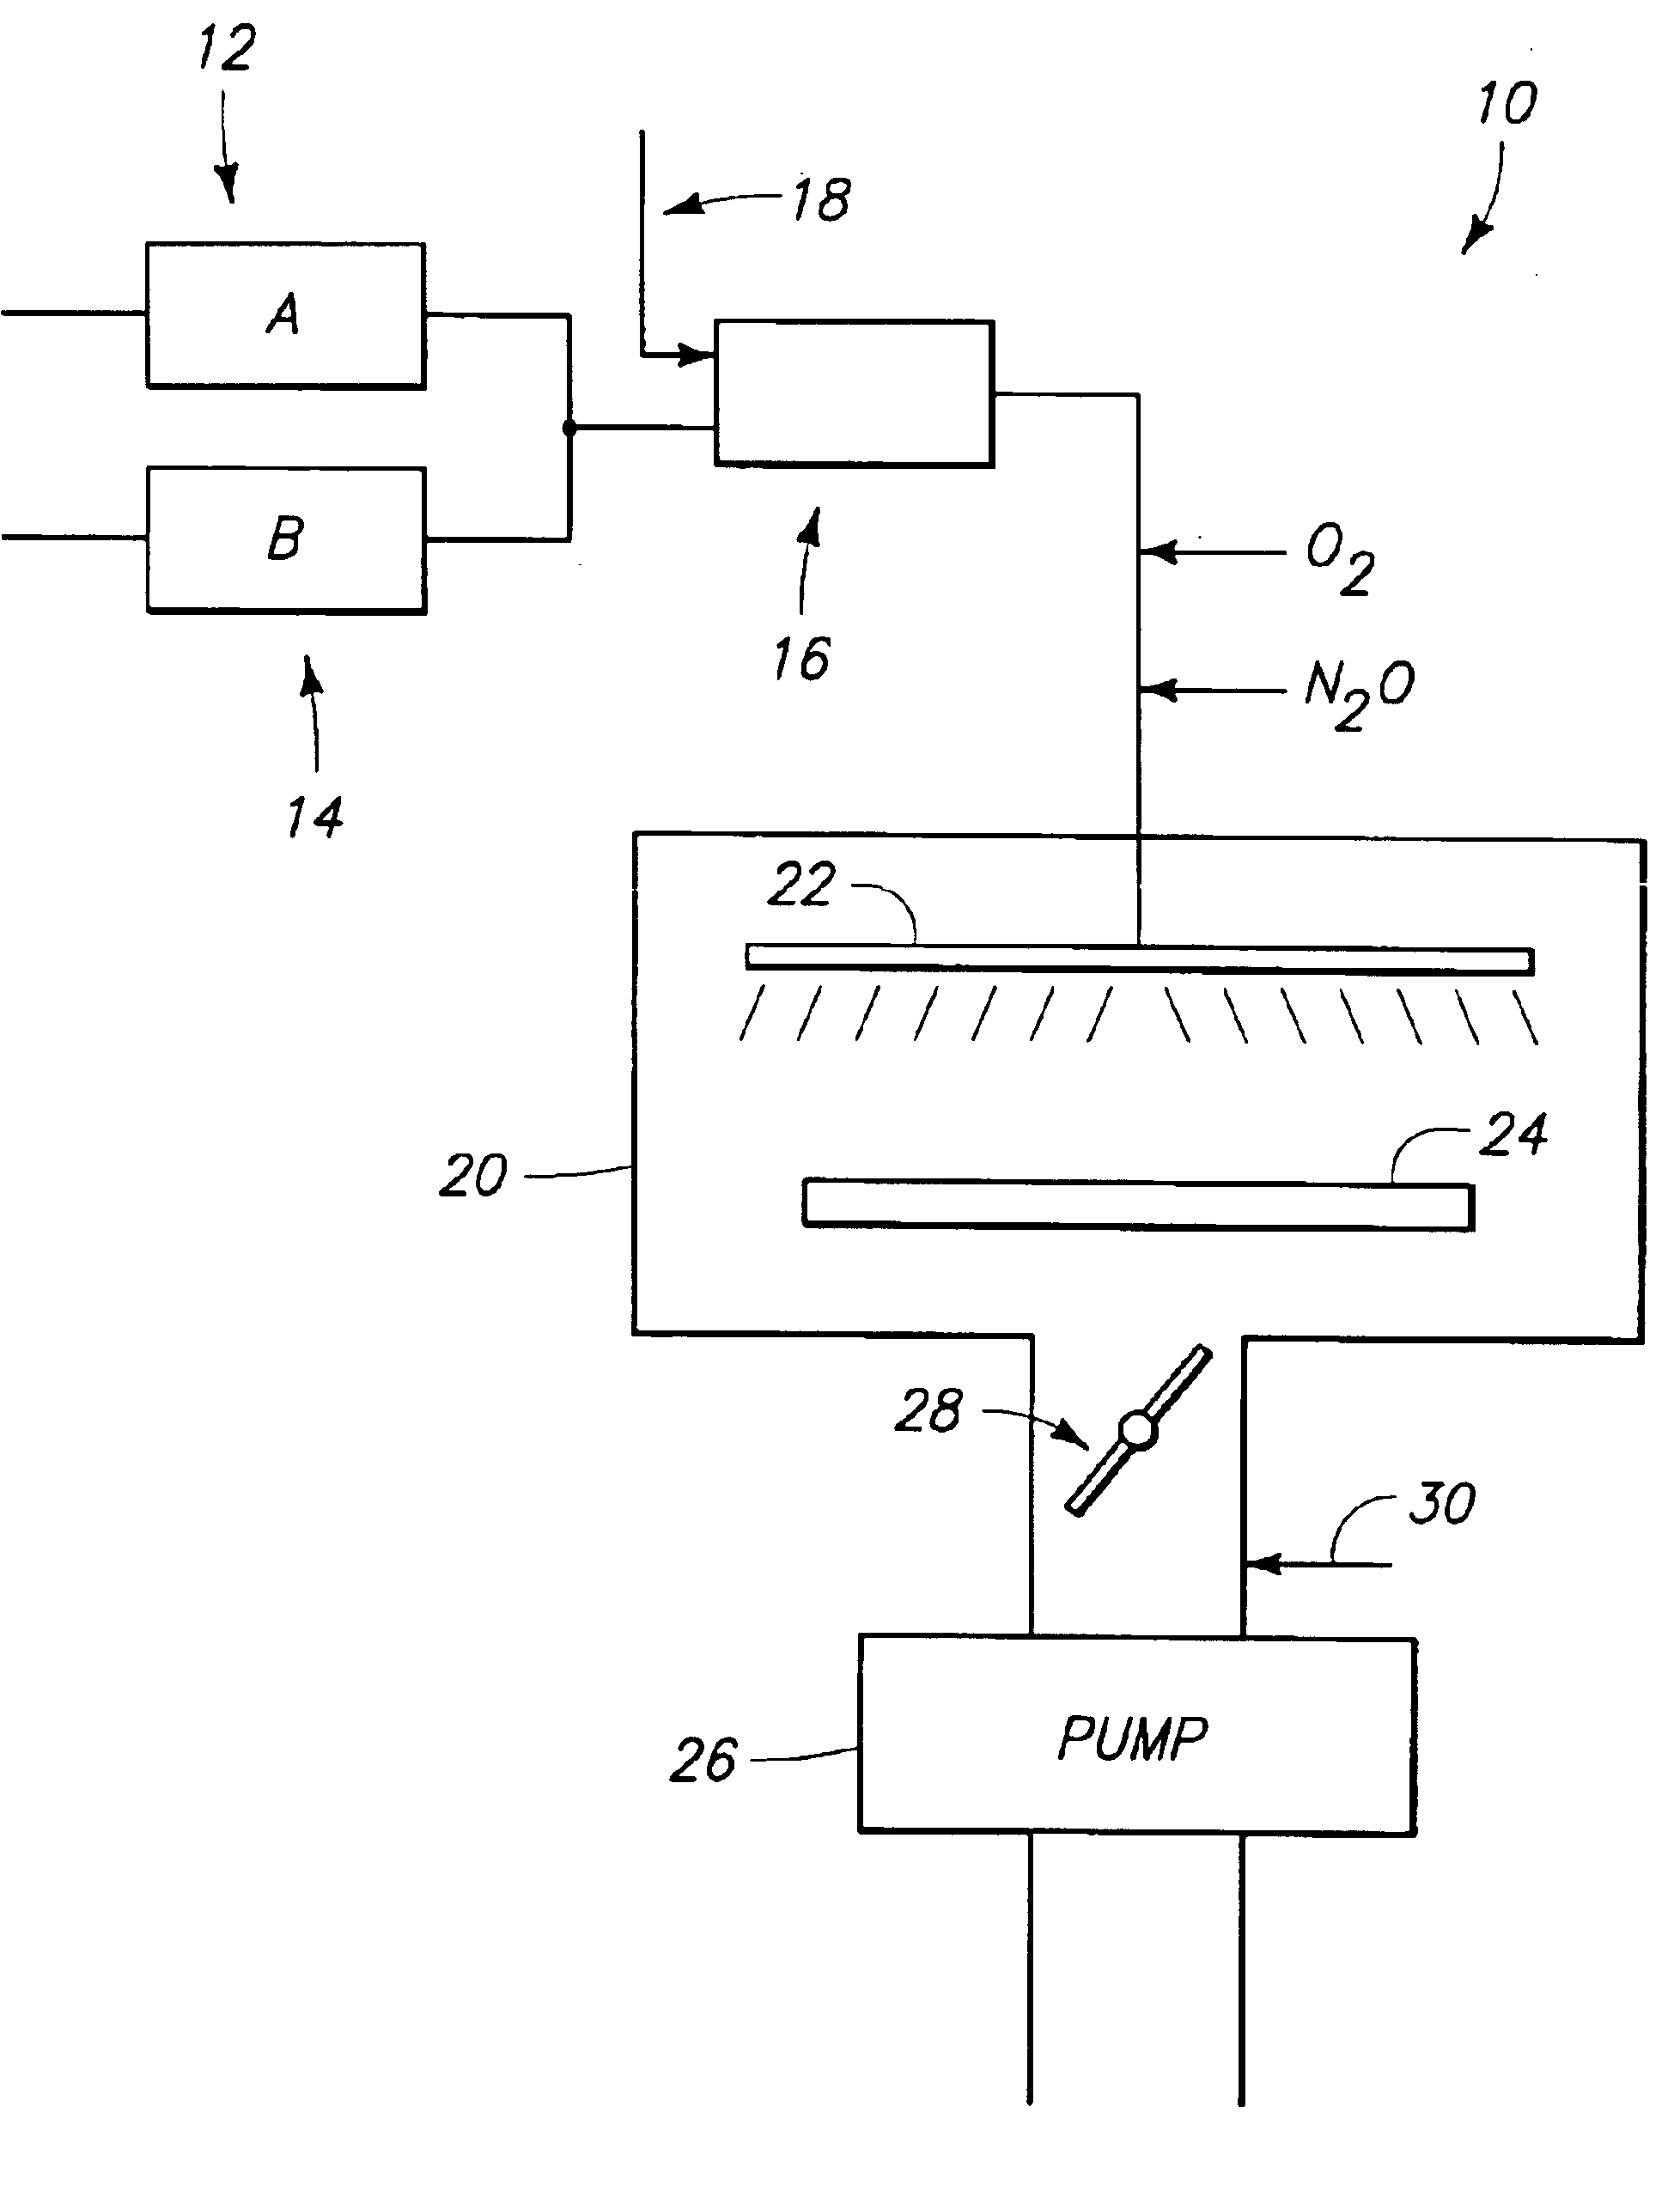 Chemical vapor deposition method for depositing a high k dielectric film